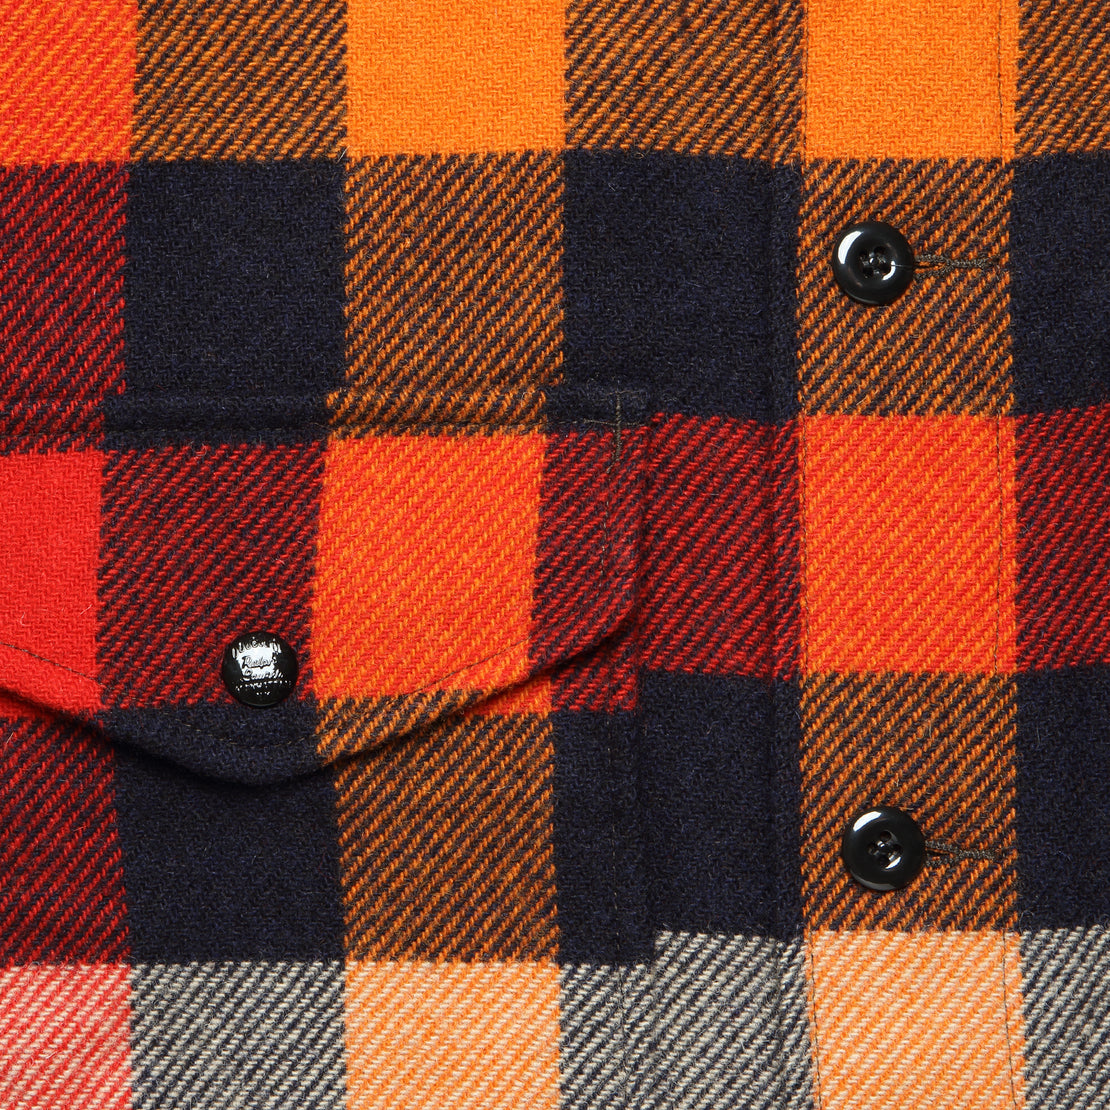 Wool Shirt Jacket - Orange Multi Plaid - RRL - STAG Provisions - Outerwear - Shirt Jacket